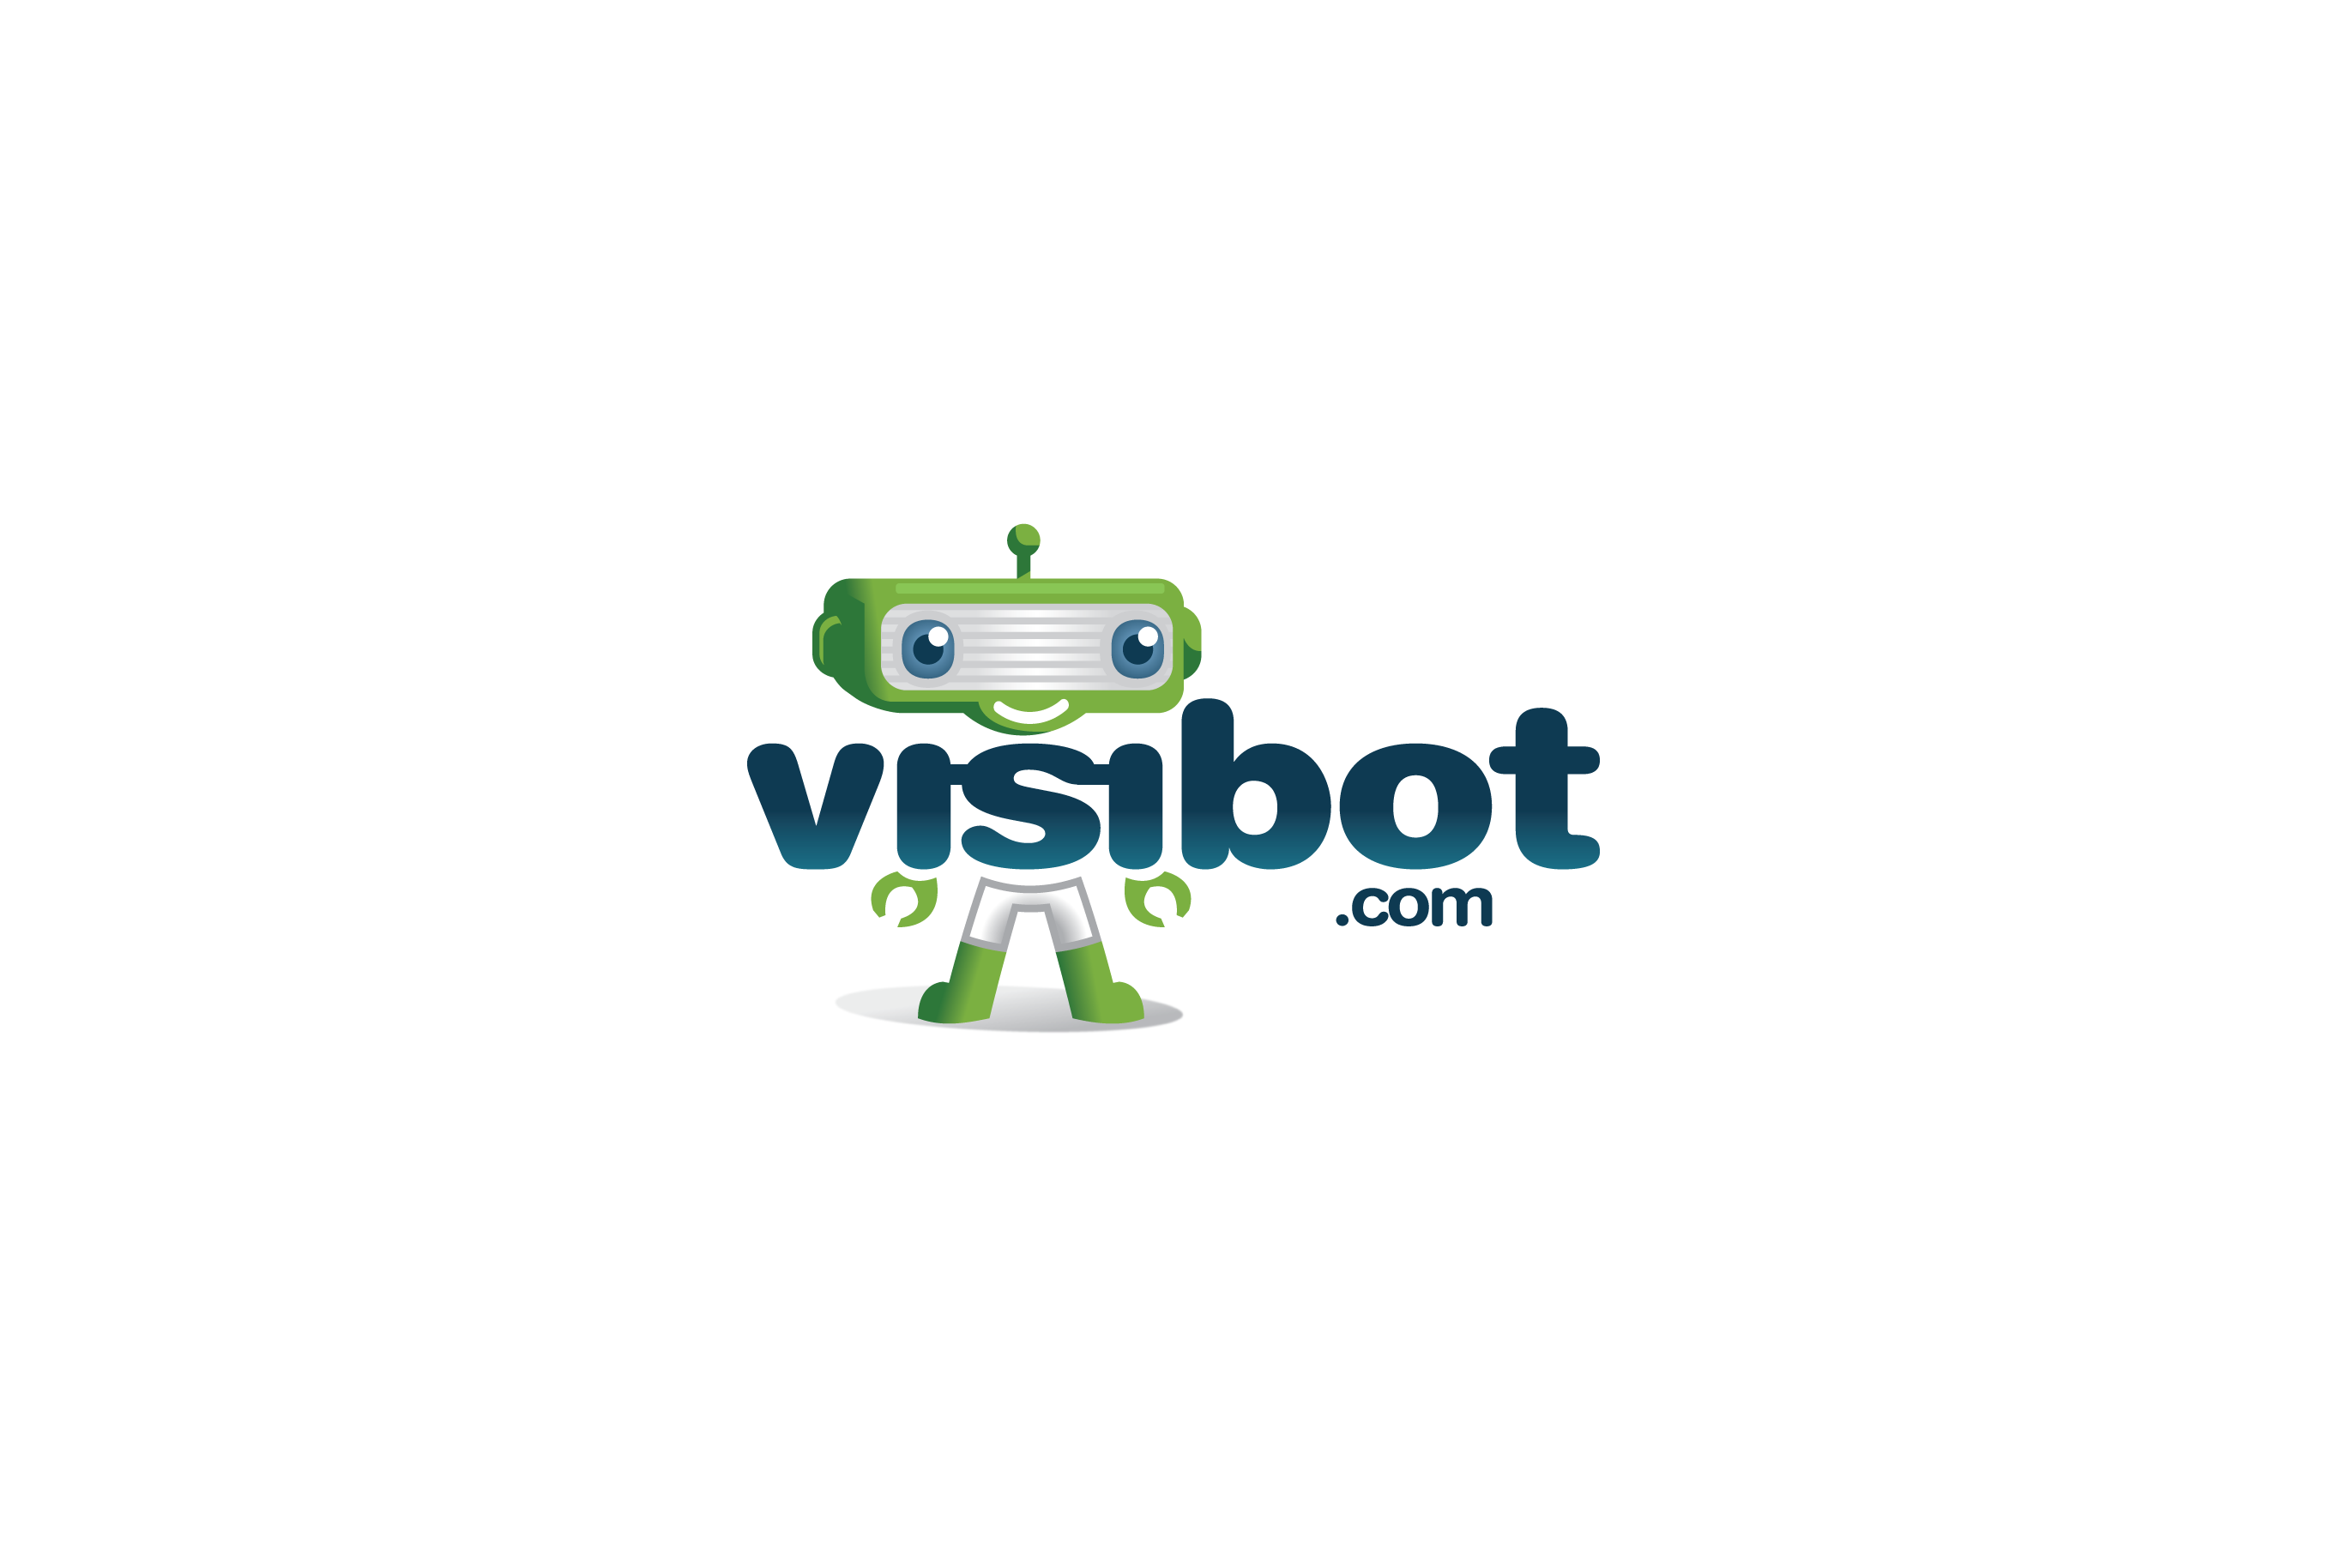 visibot robot logo design sold out logo cowboy #32169